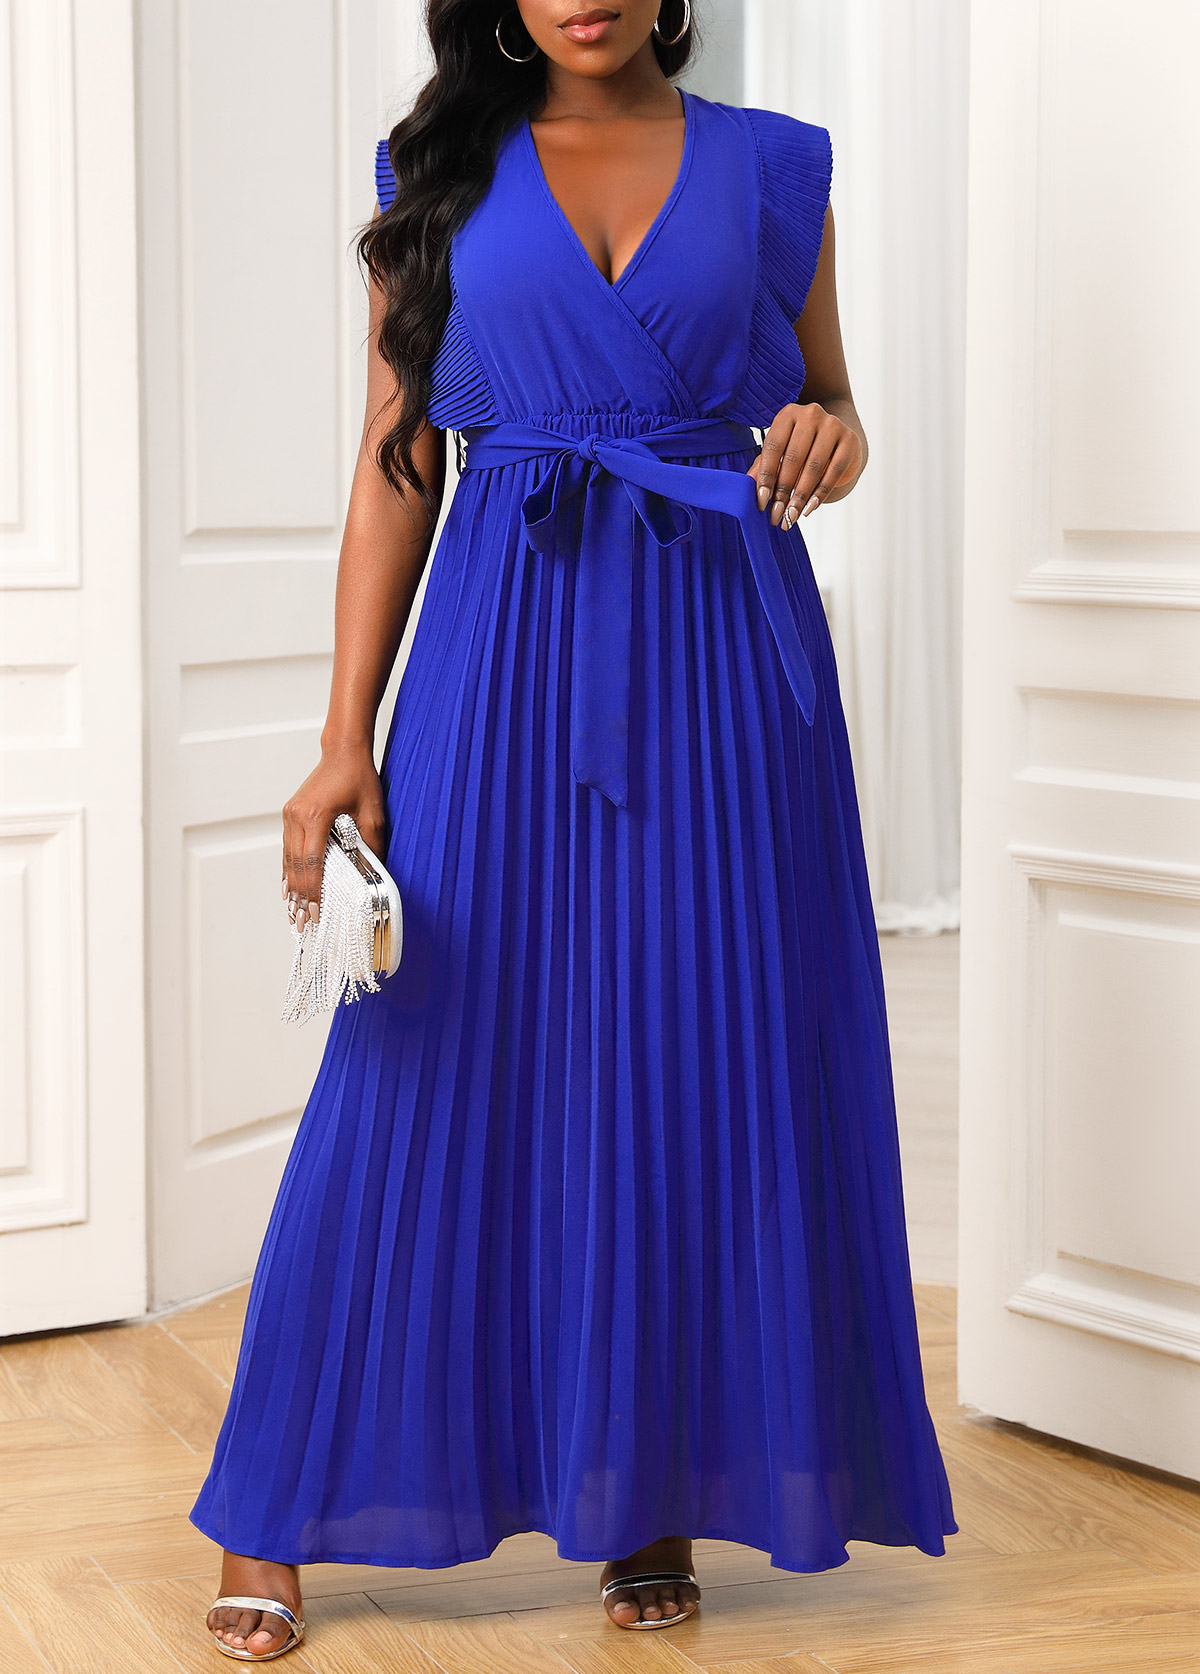 Belted Royal Blue Ruffle Sleeve Dress